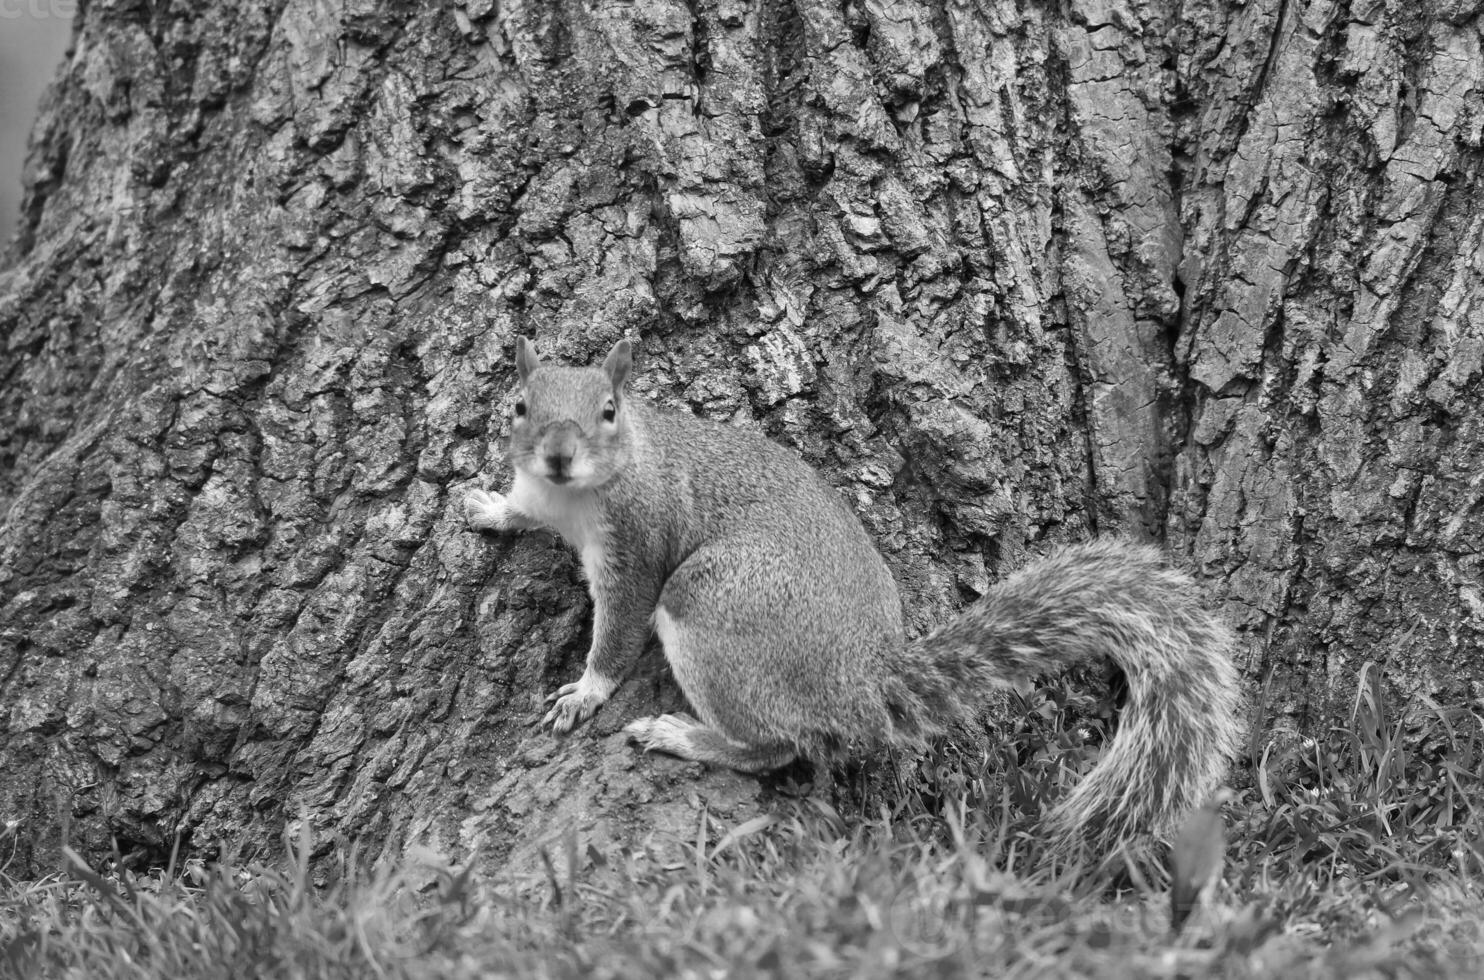 Cute Squirrel in Grass Seeking Food at Wardown Public Park of Luton, England UK photo